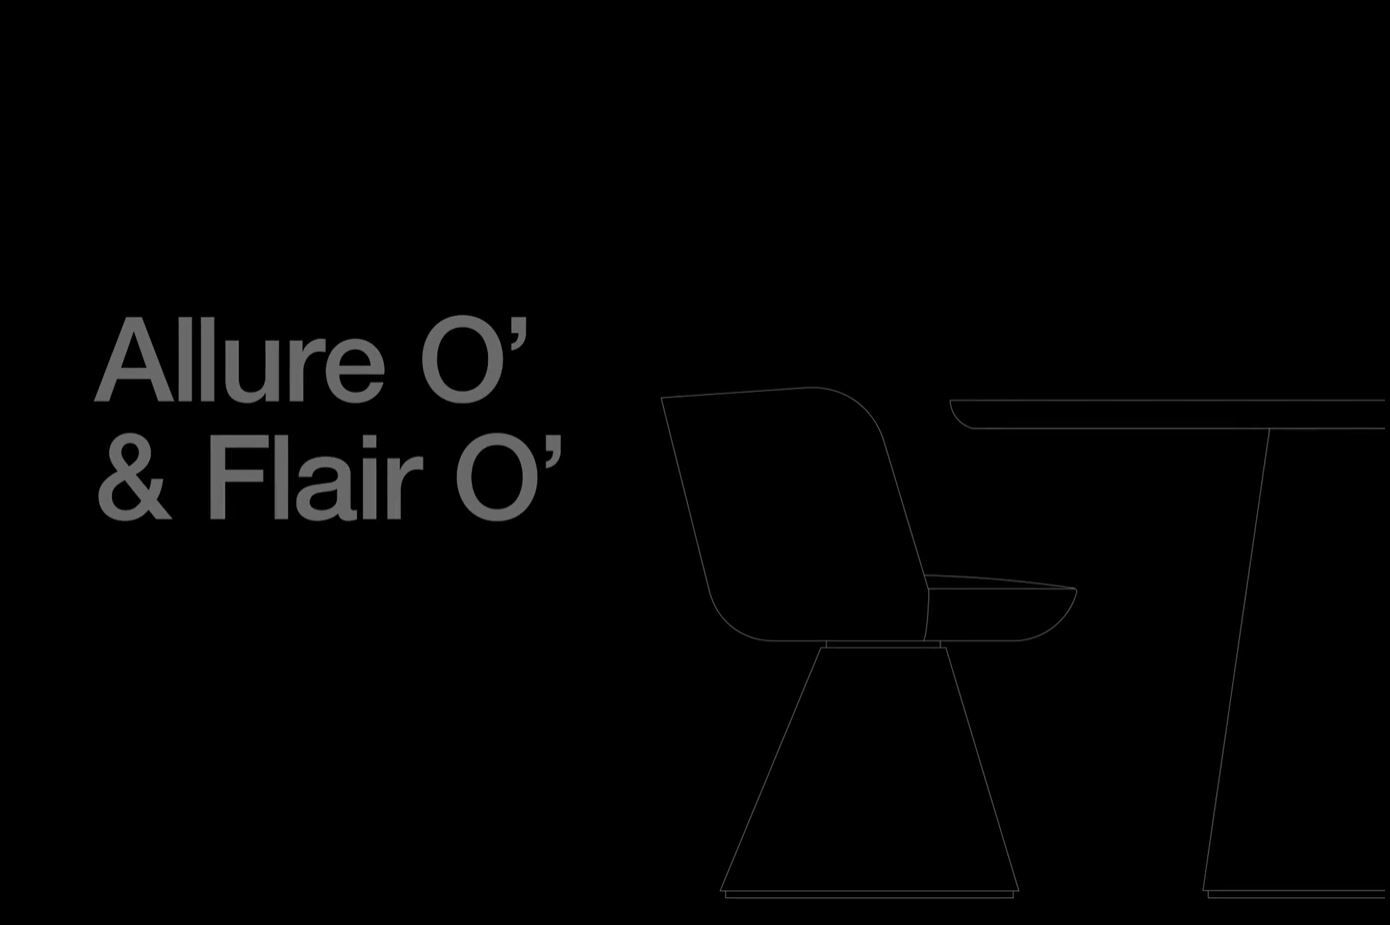 Allure O' & Flair O'